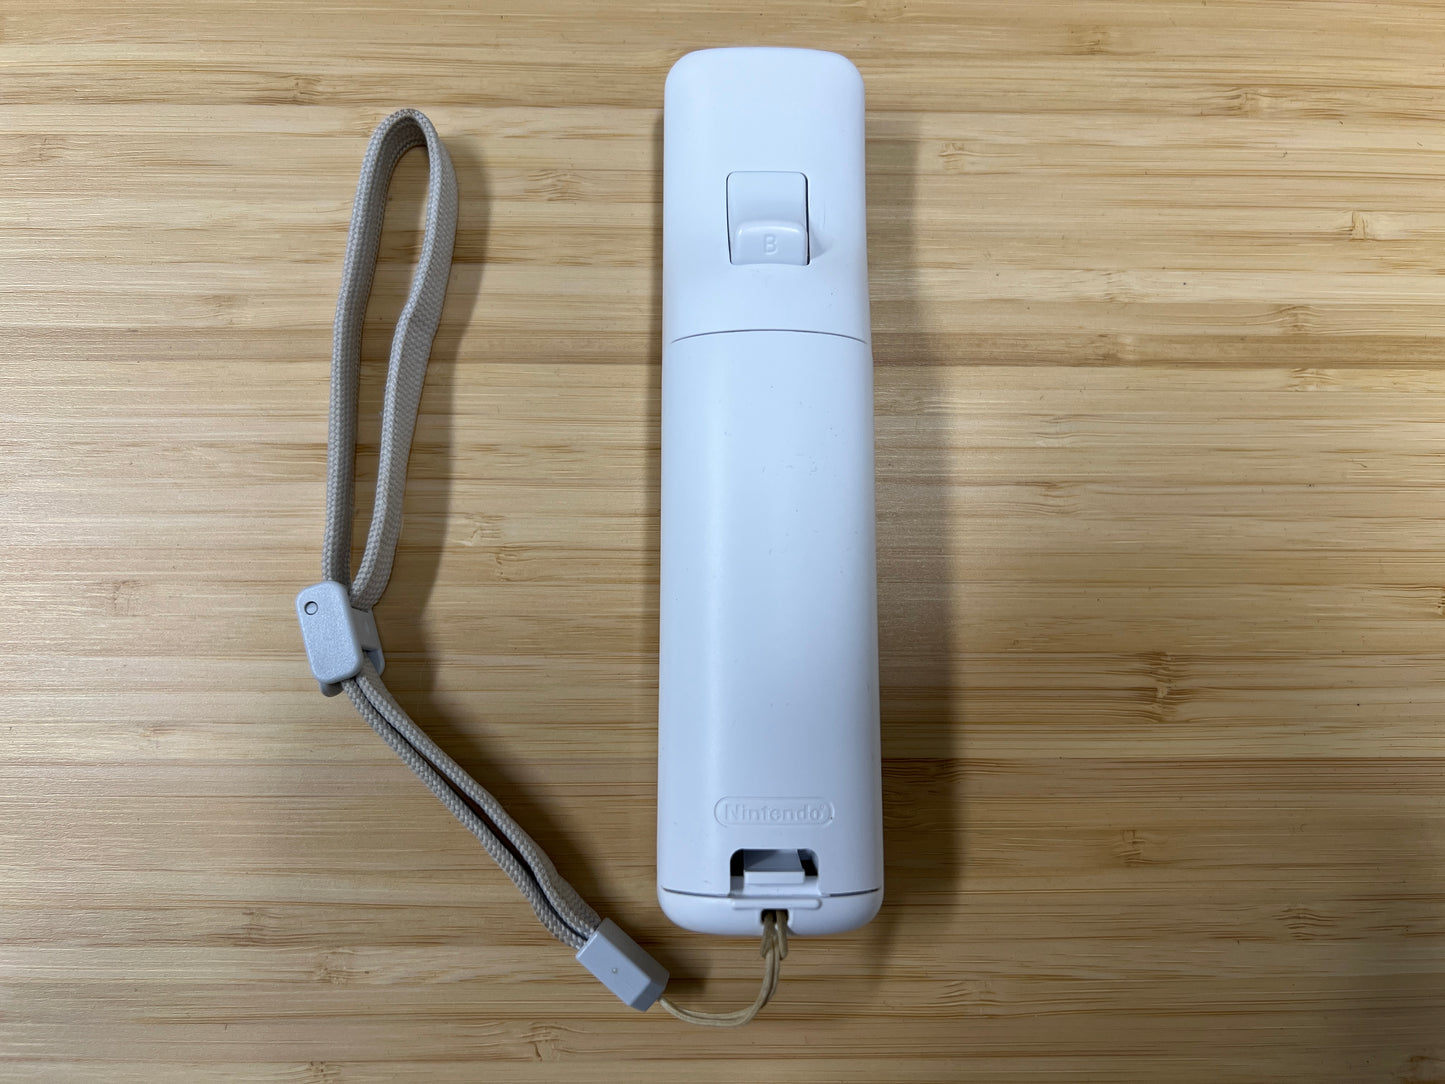 Nintendo Wii White Console w/ Controller, Cords, & Box (Used)